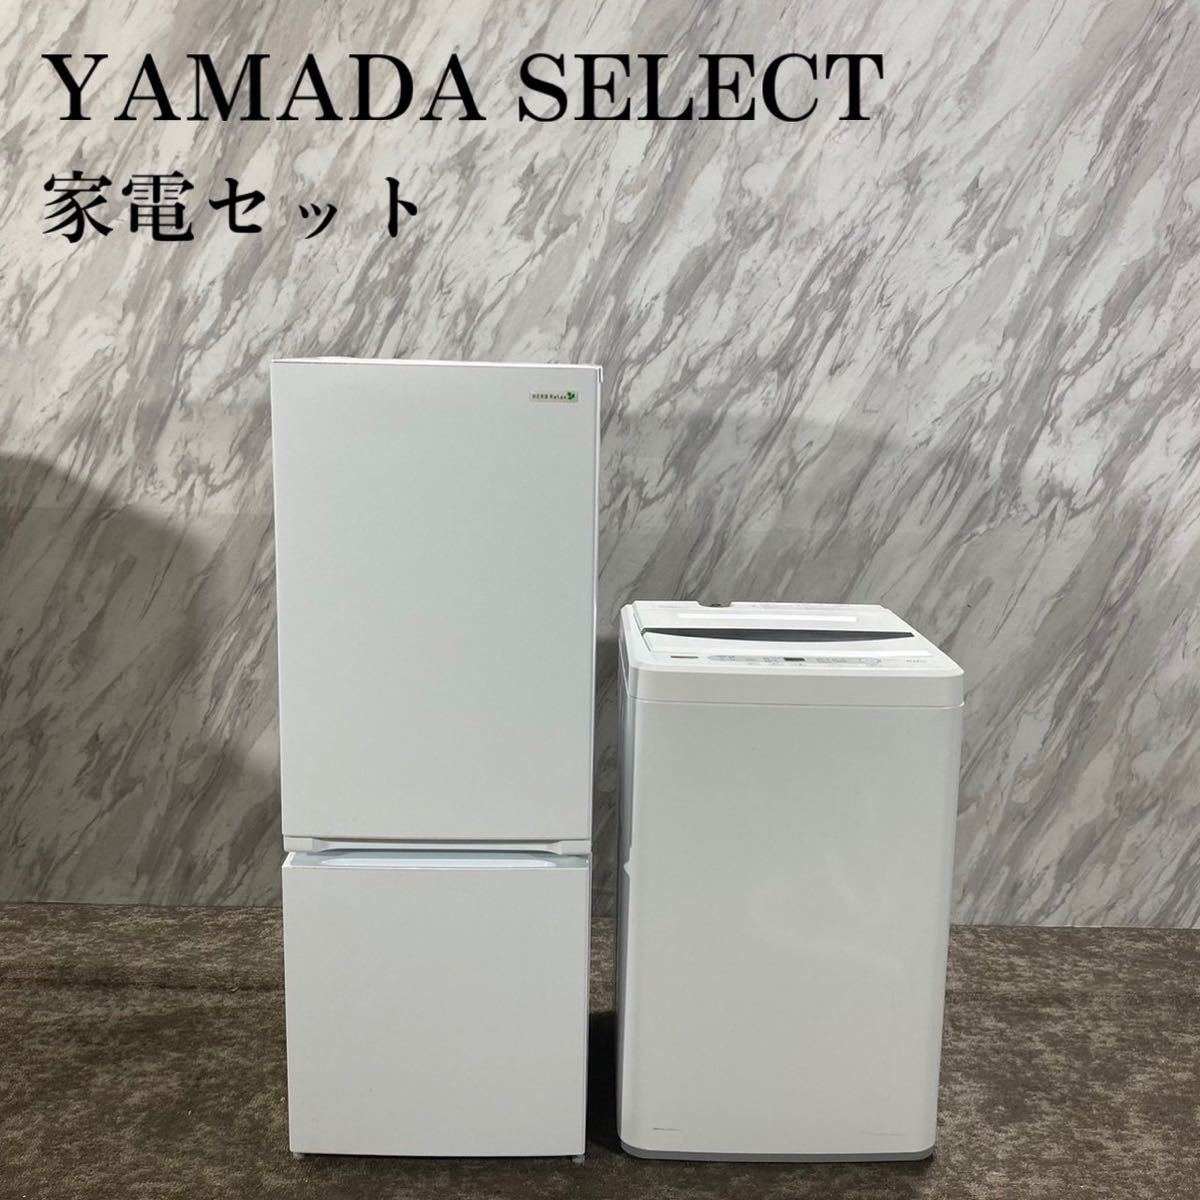 YAMADA SELECT 生活家電 2点セット 冷蔵庫 洗濯機 家電 J607